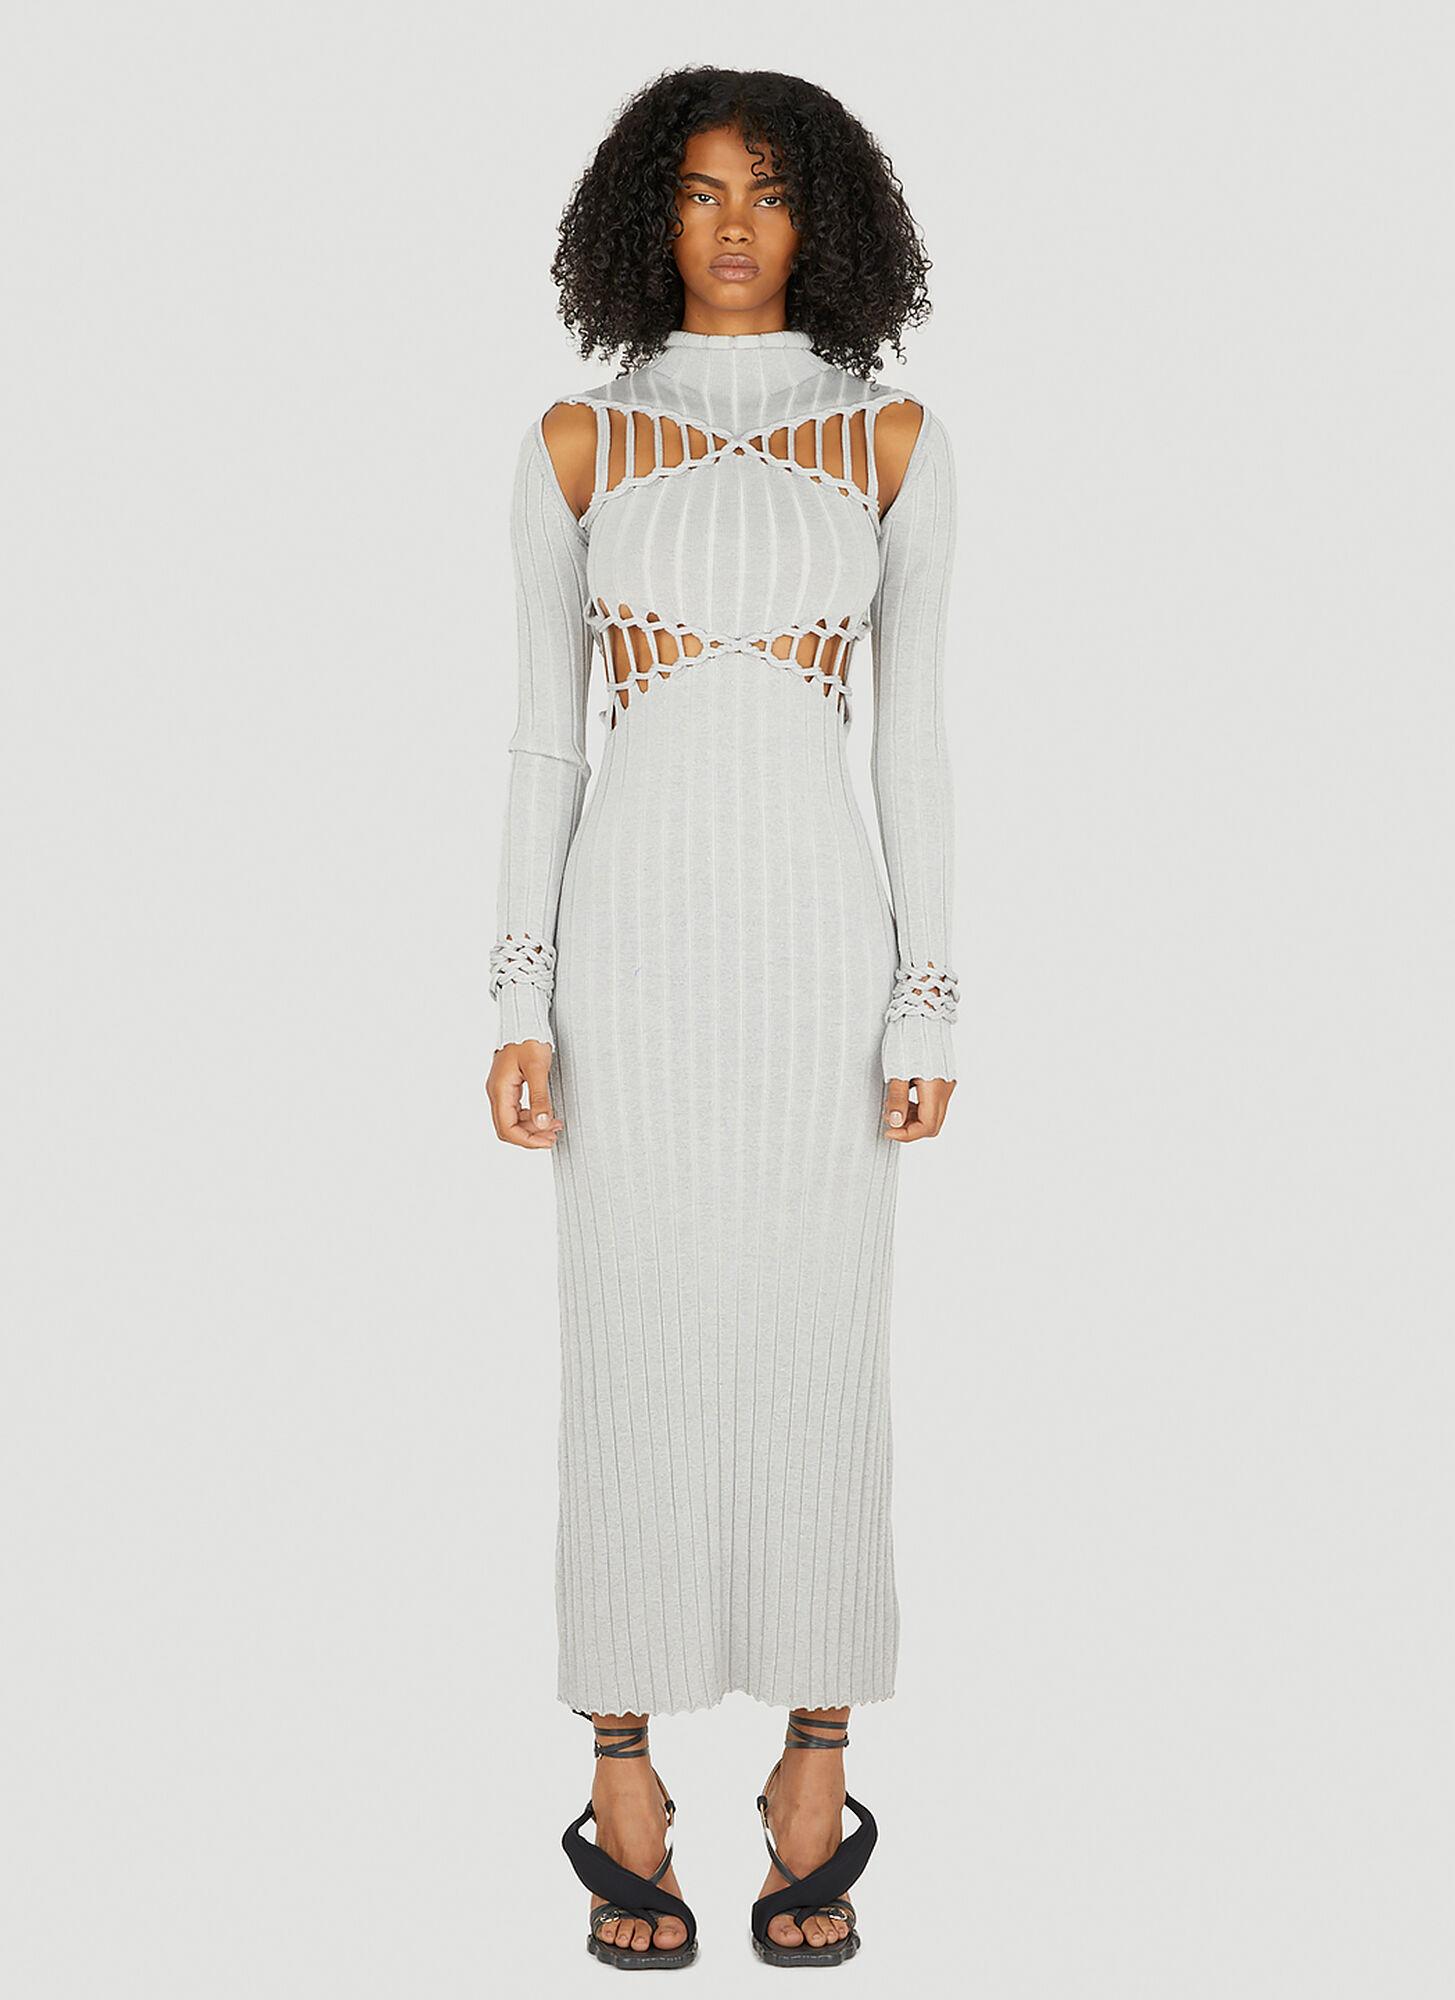 Dion Lee X-braid Reflective Dress in White | Lyst